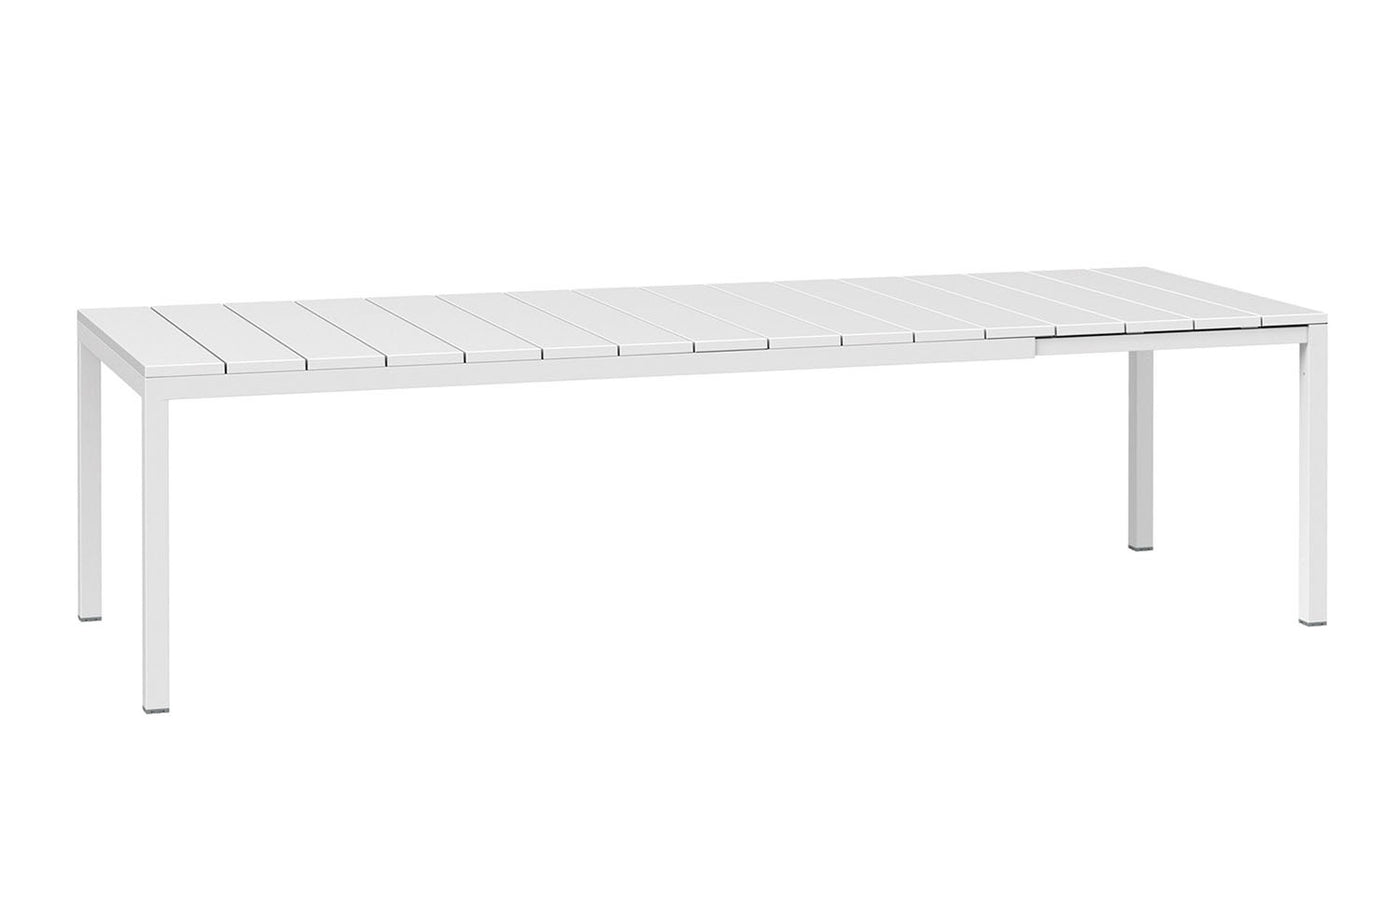 Nardi Rio 83"-110" Outdoor Extension Dining Table - White